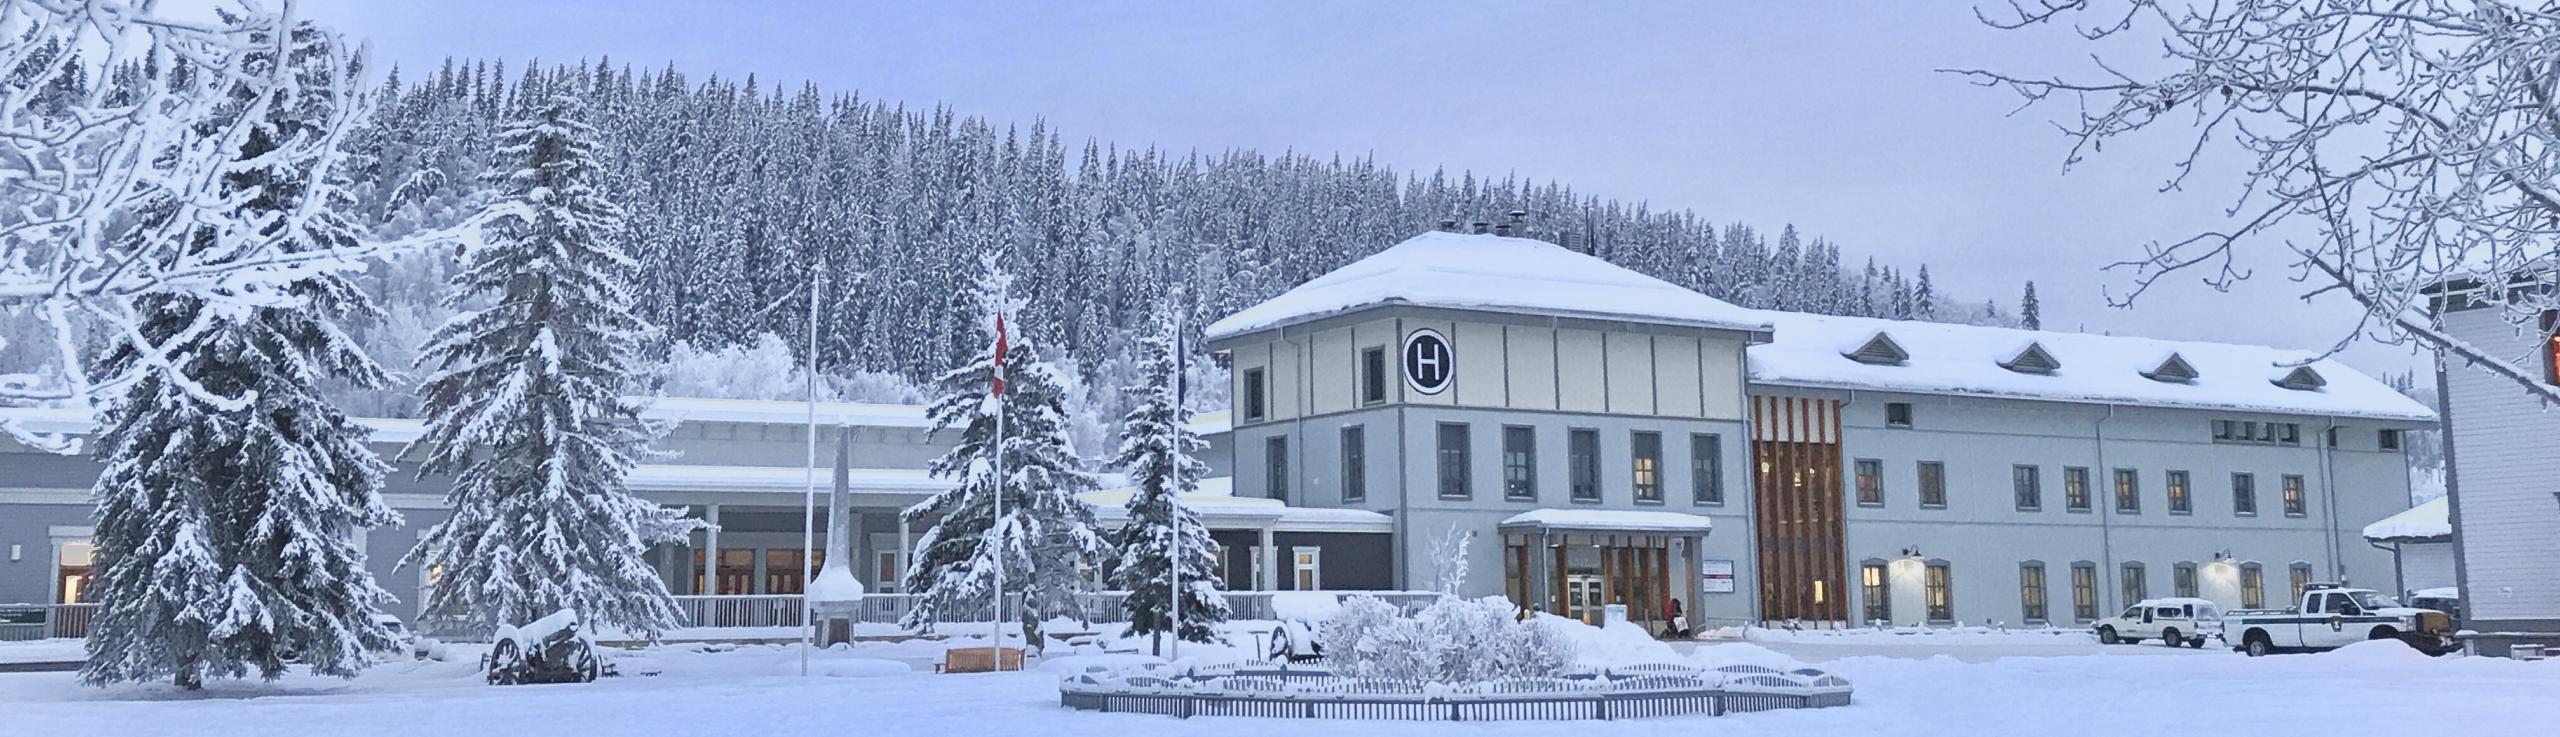 Dawson City Community Hospital in the winter. 